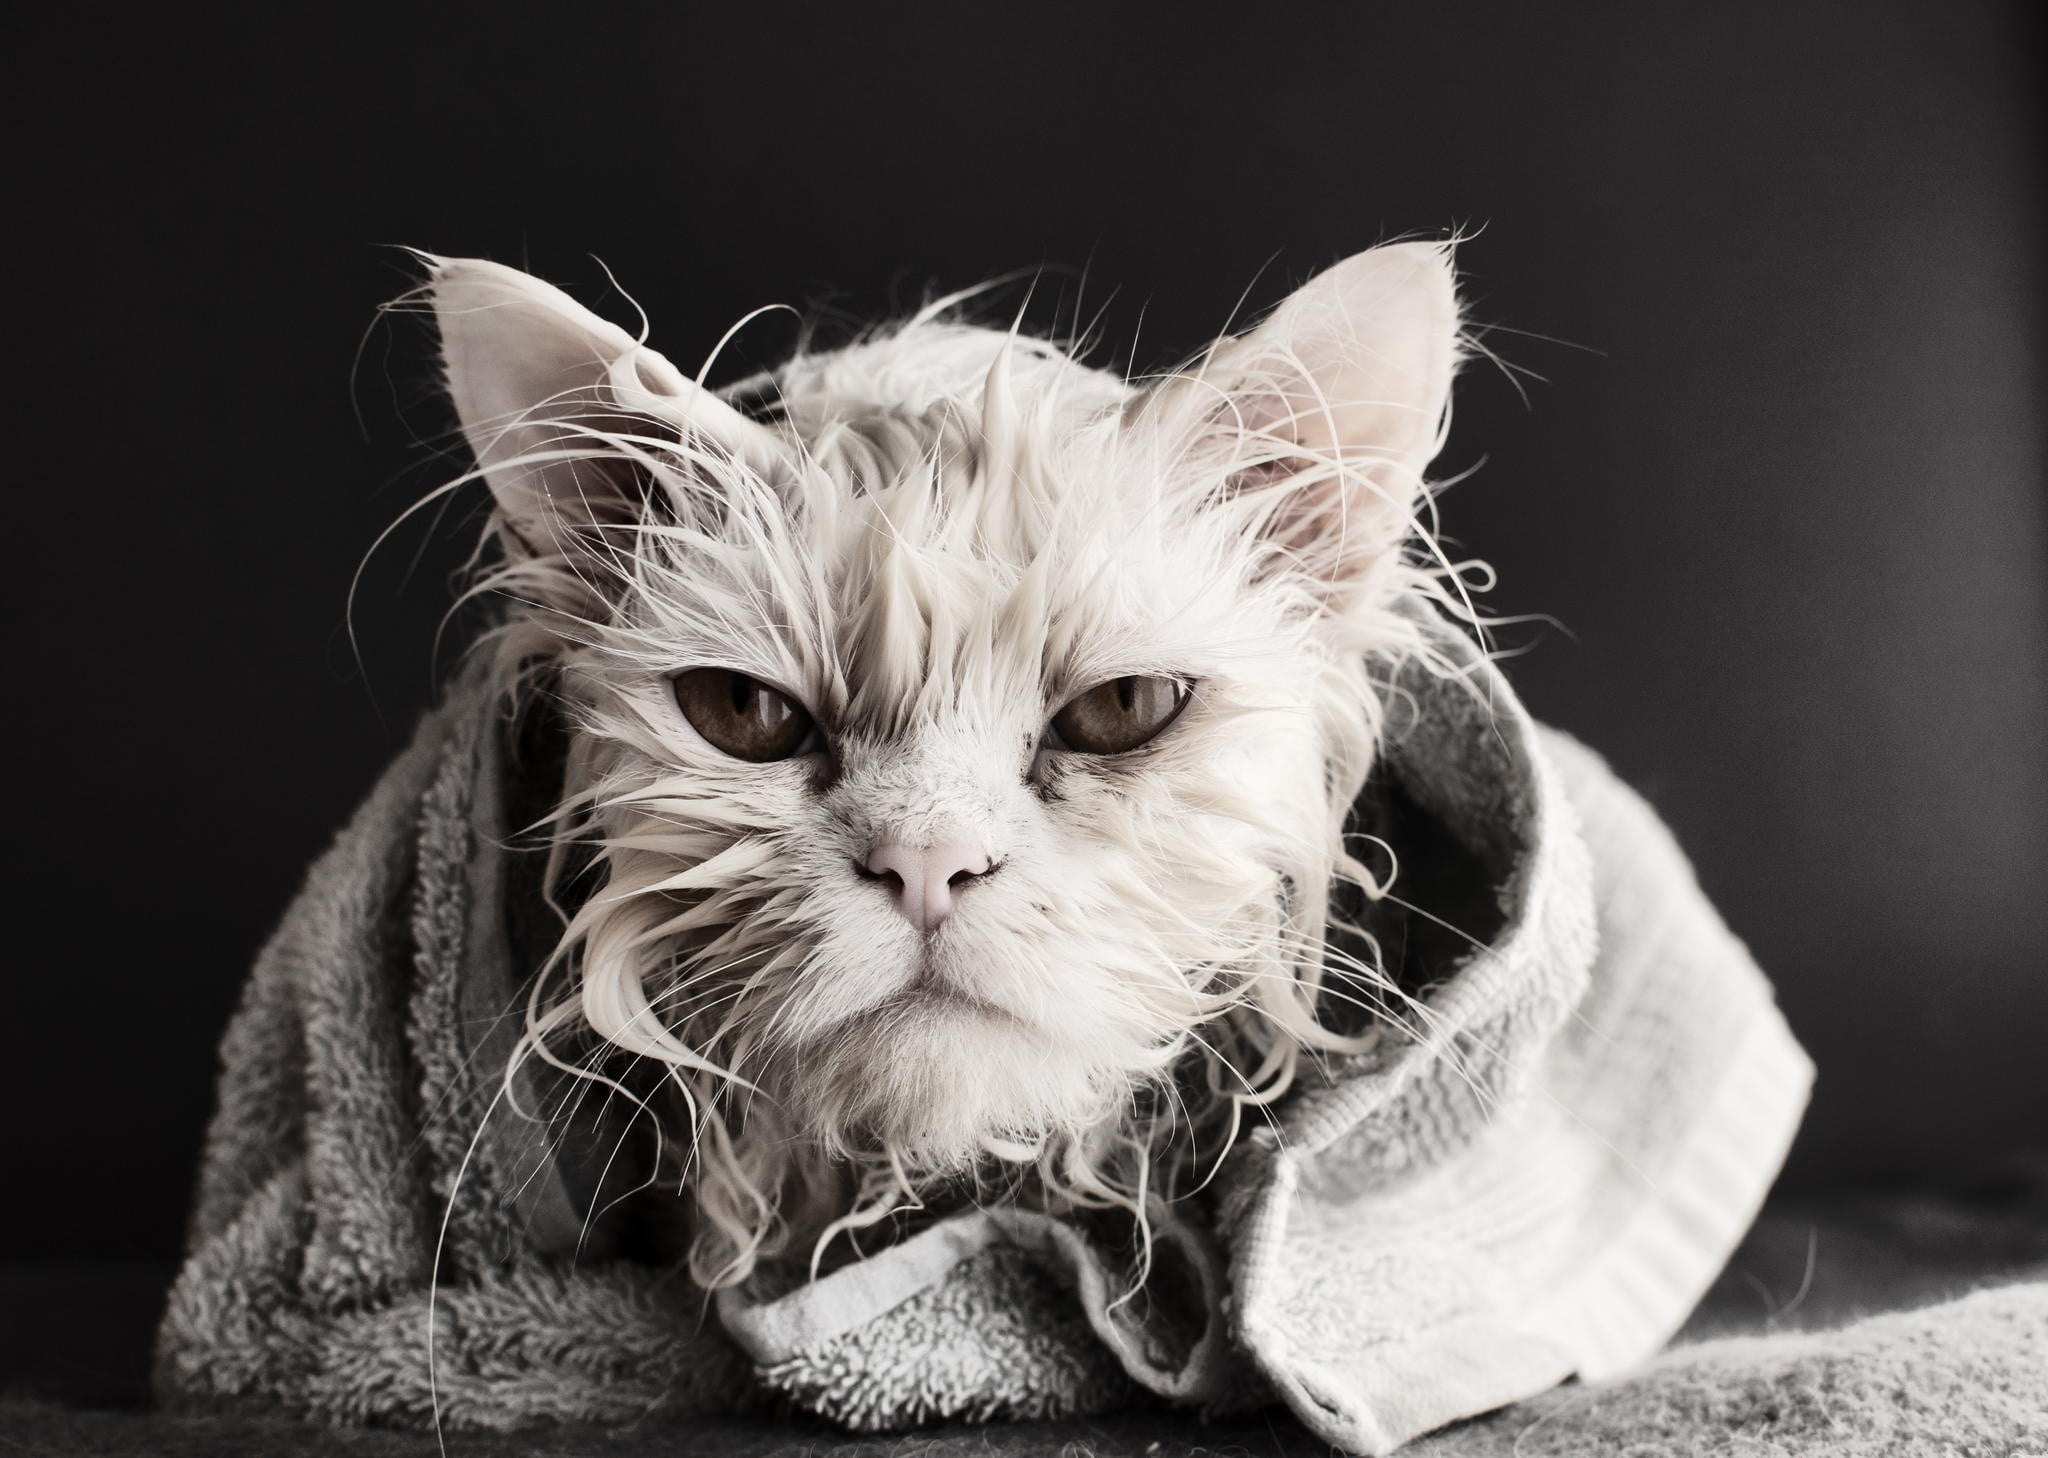 cat-wet-animals-bath-towel-wallpaper.jpg